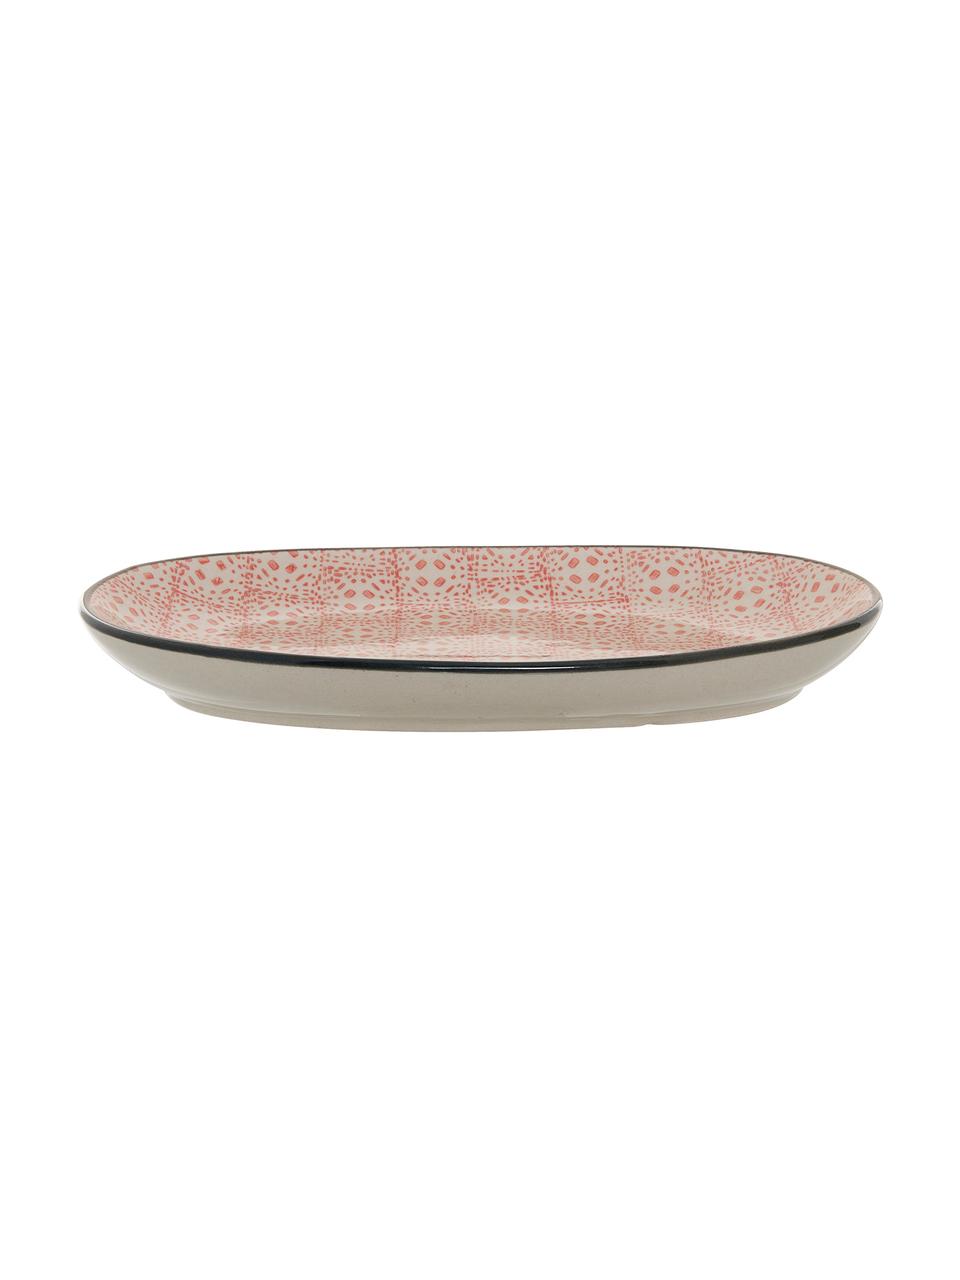 Servierplatten Cécile mit kleinem Muster, L 22 x B 13 cm, 2er-Set, Keramik, Mehrfarbig, 13 x 22 cm